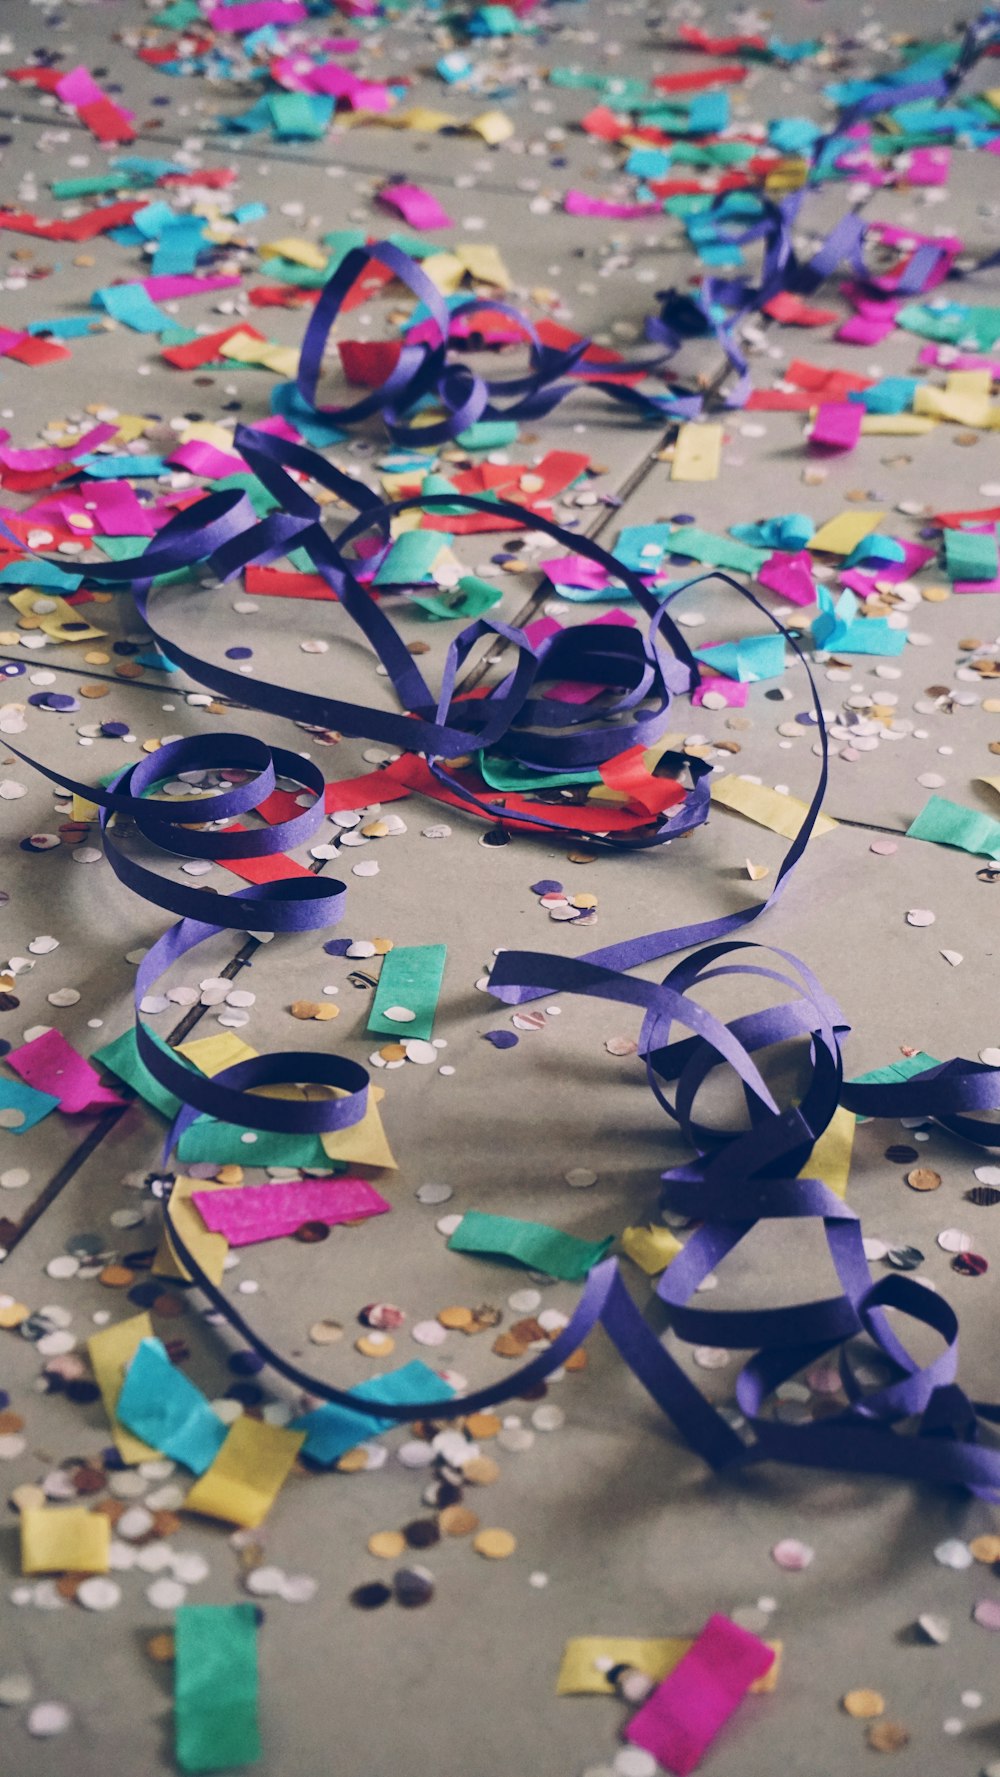 Ribbons and confetti on floor photo – Free Birthday Image on Unsplash